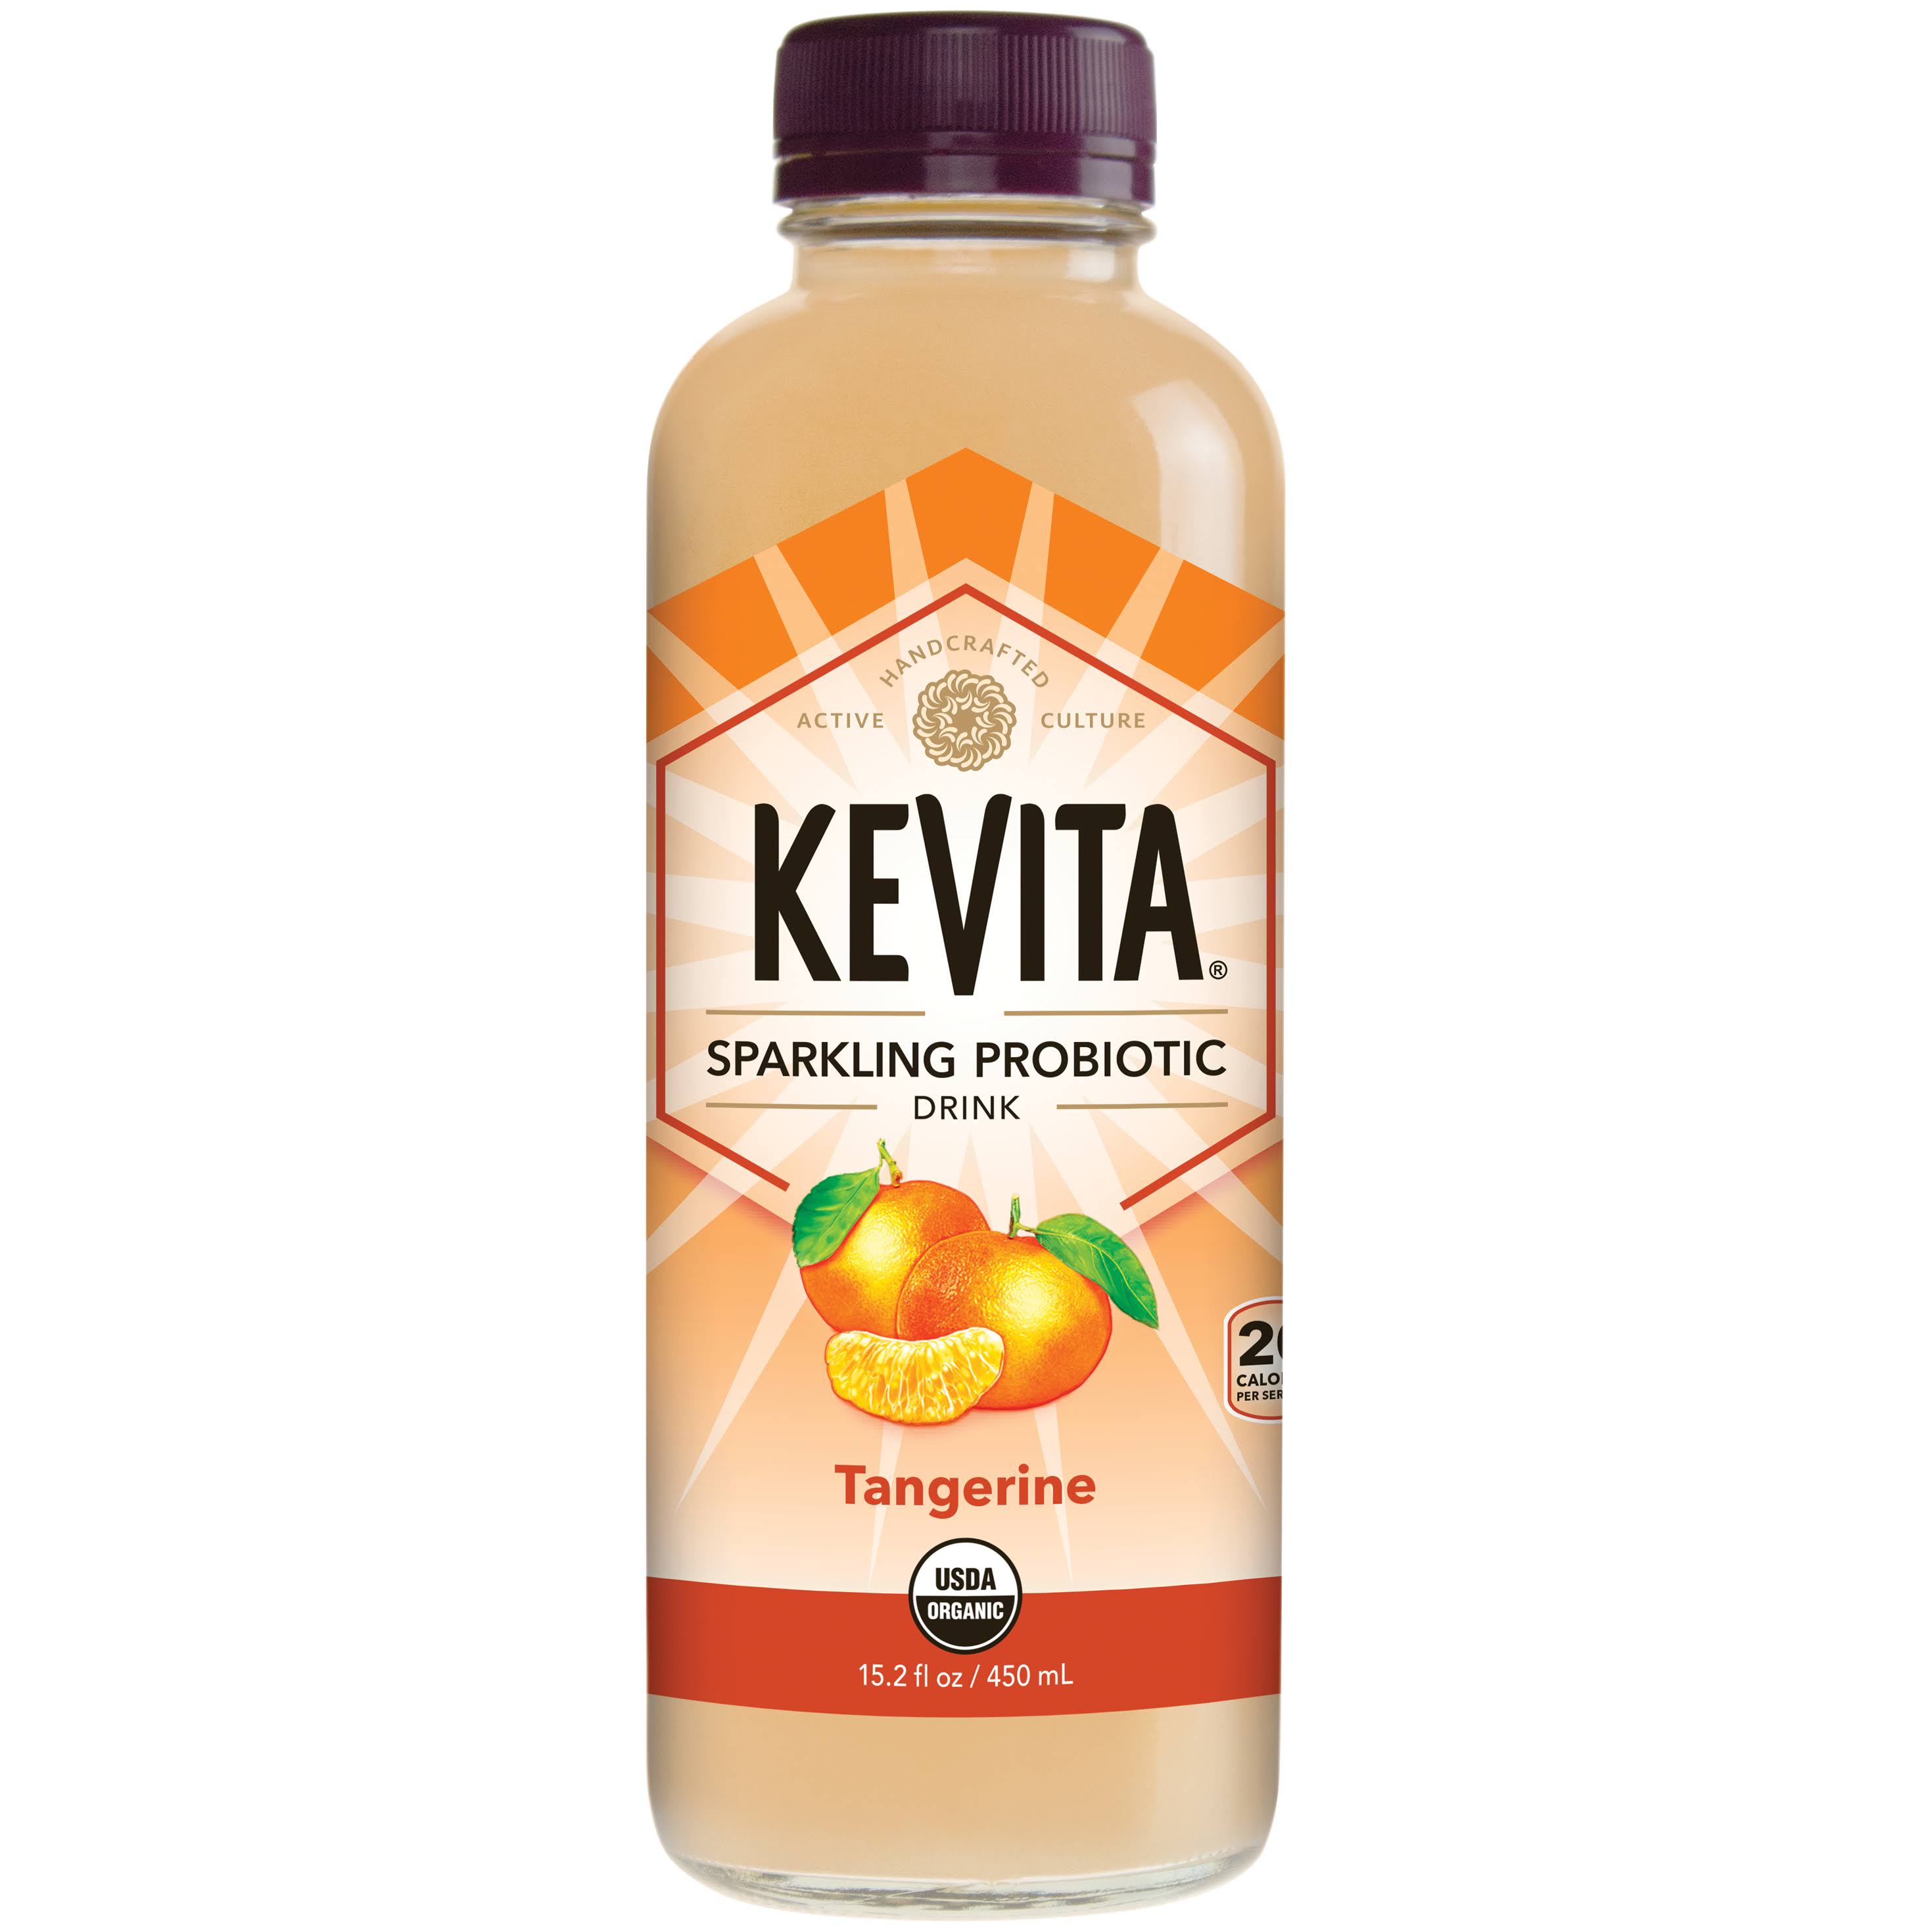 KeVita Probiotic Drink, Sparkling, Tangerine - 15.2 fl oz